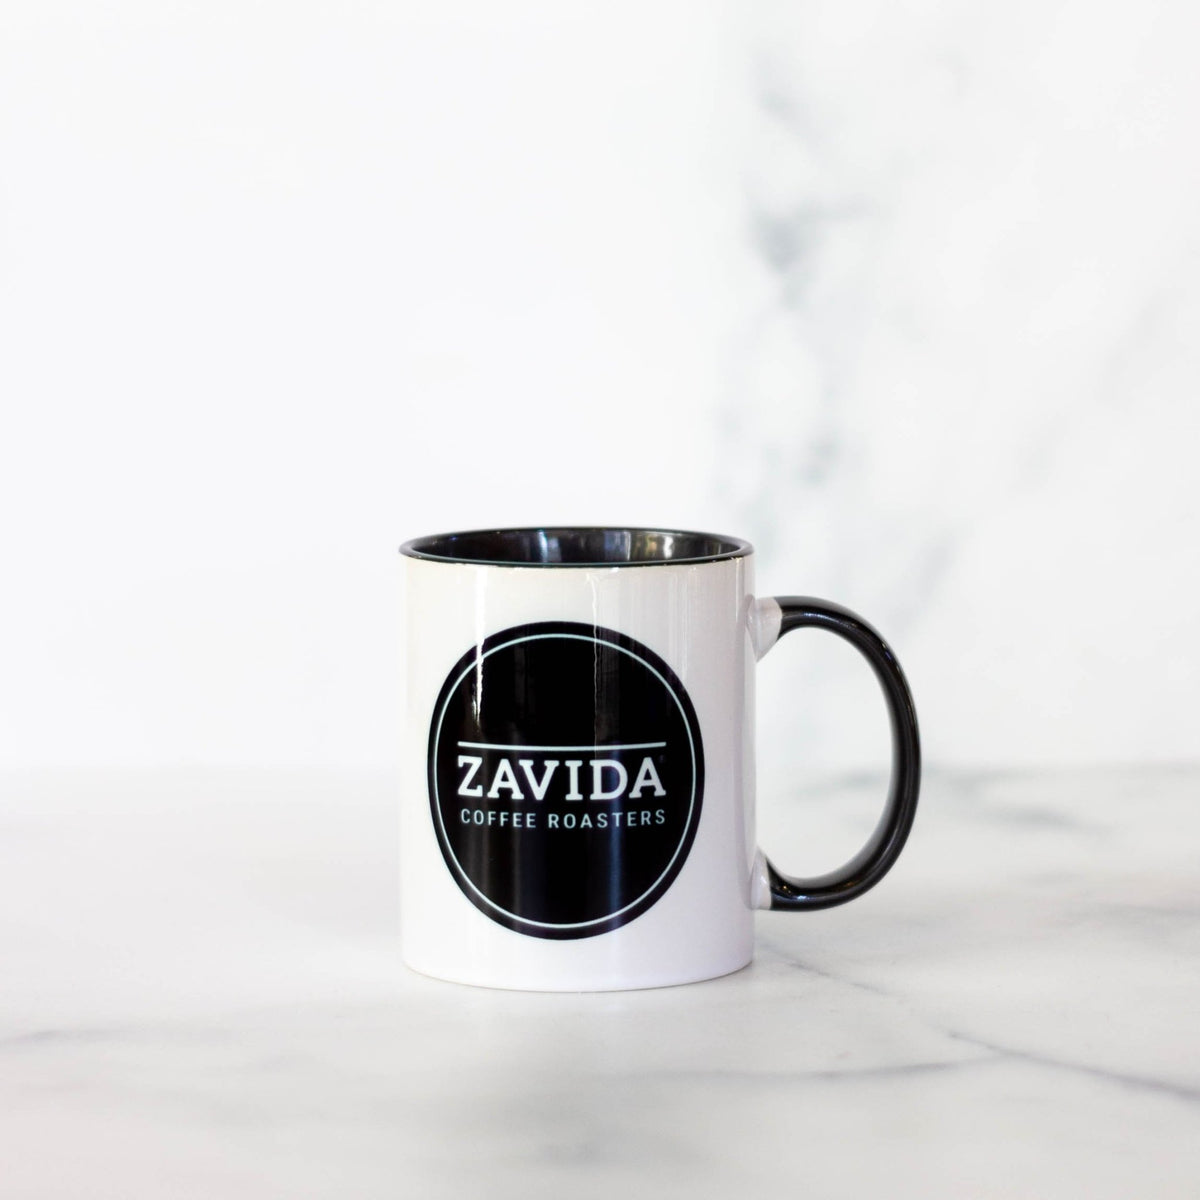 Zavida Coffee Roasters white coffee mug with a black logo